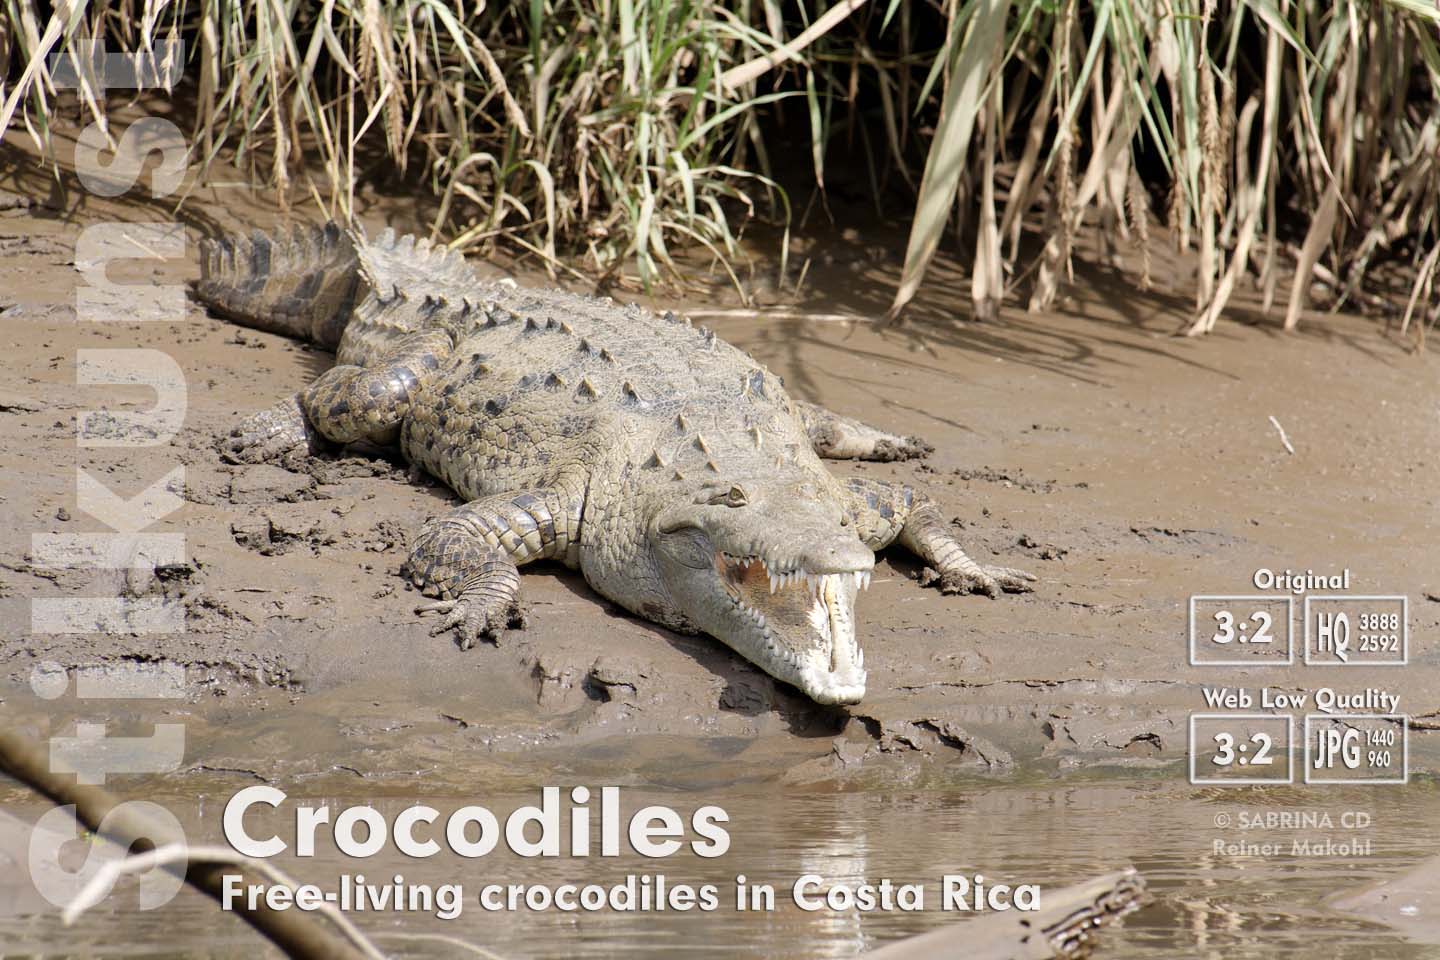 Free-living crocodiles in Costa Rica